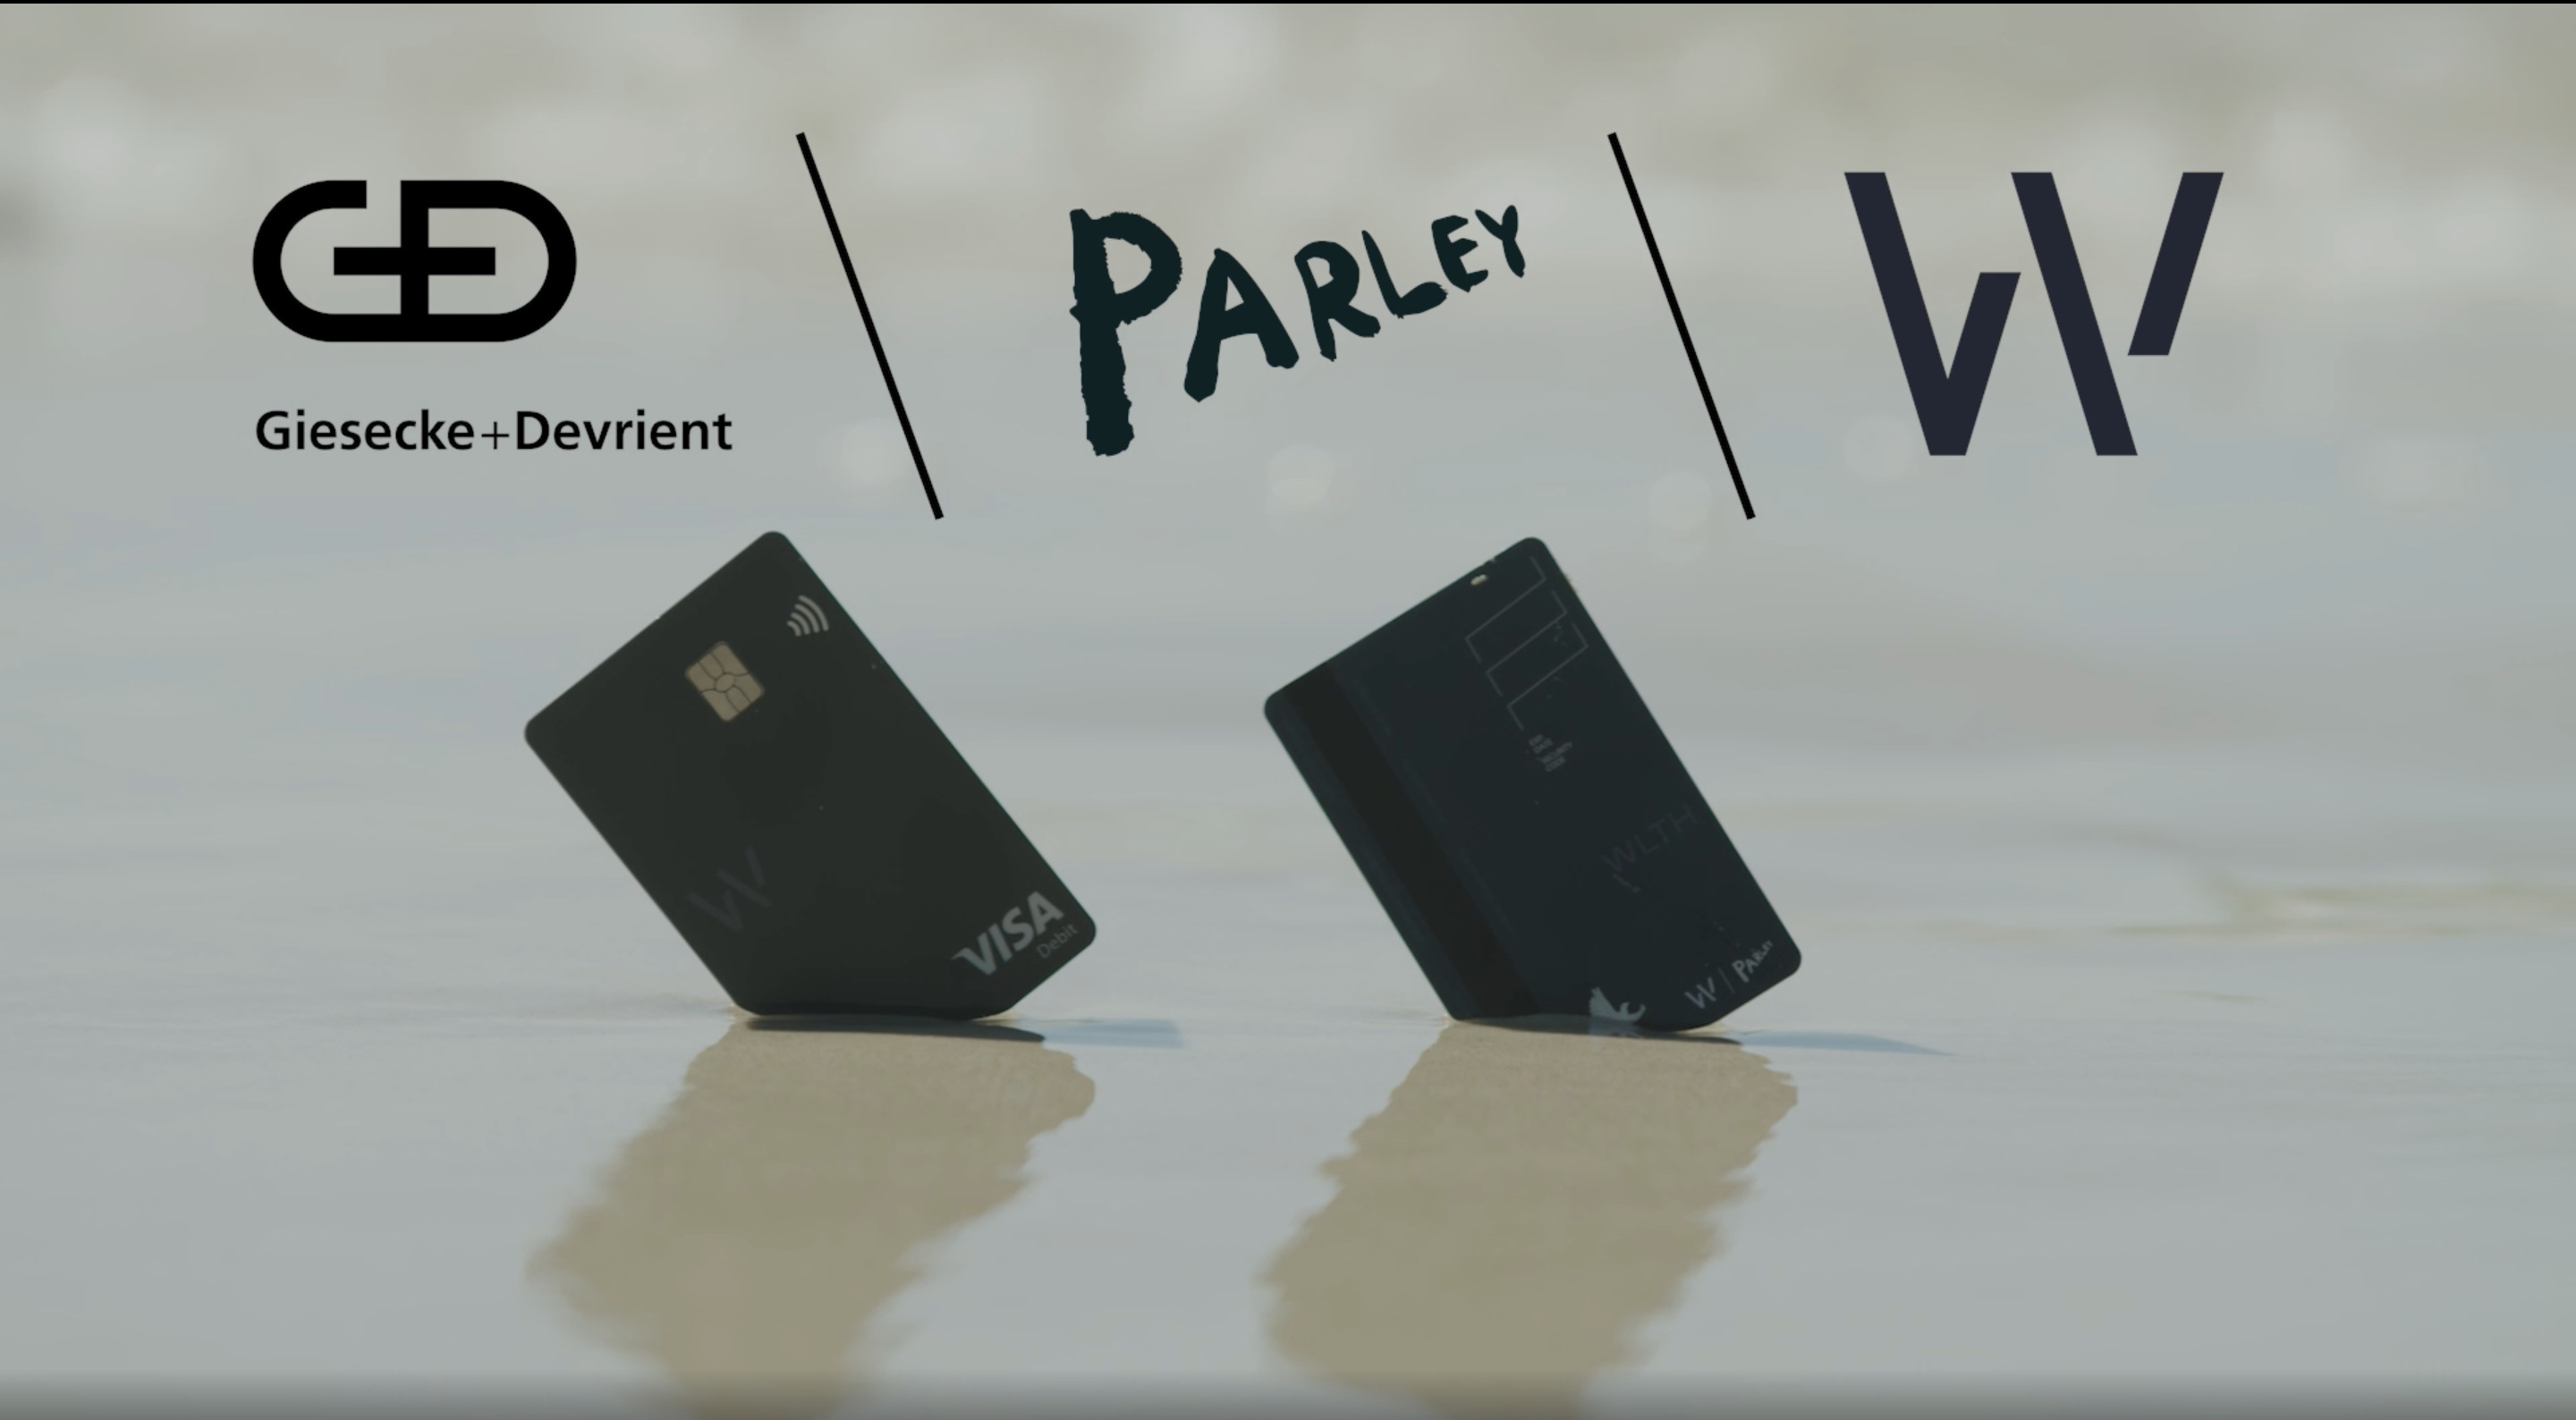 G+D Parley WLTH Card Story Thumbnail